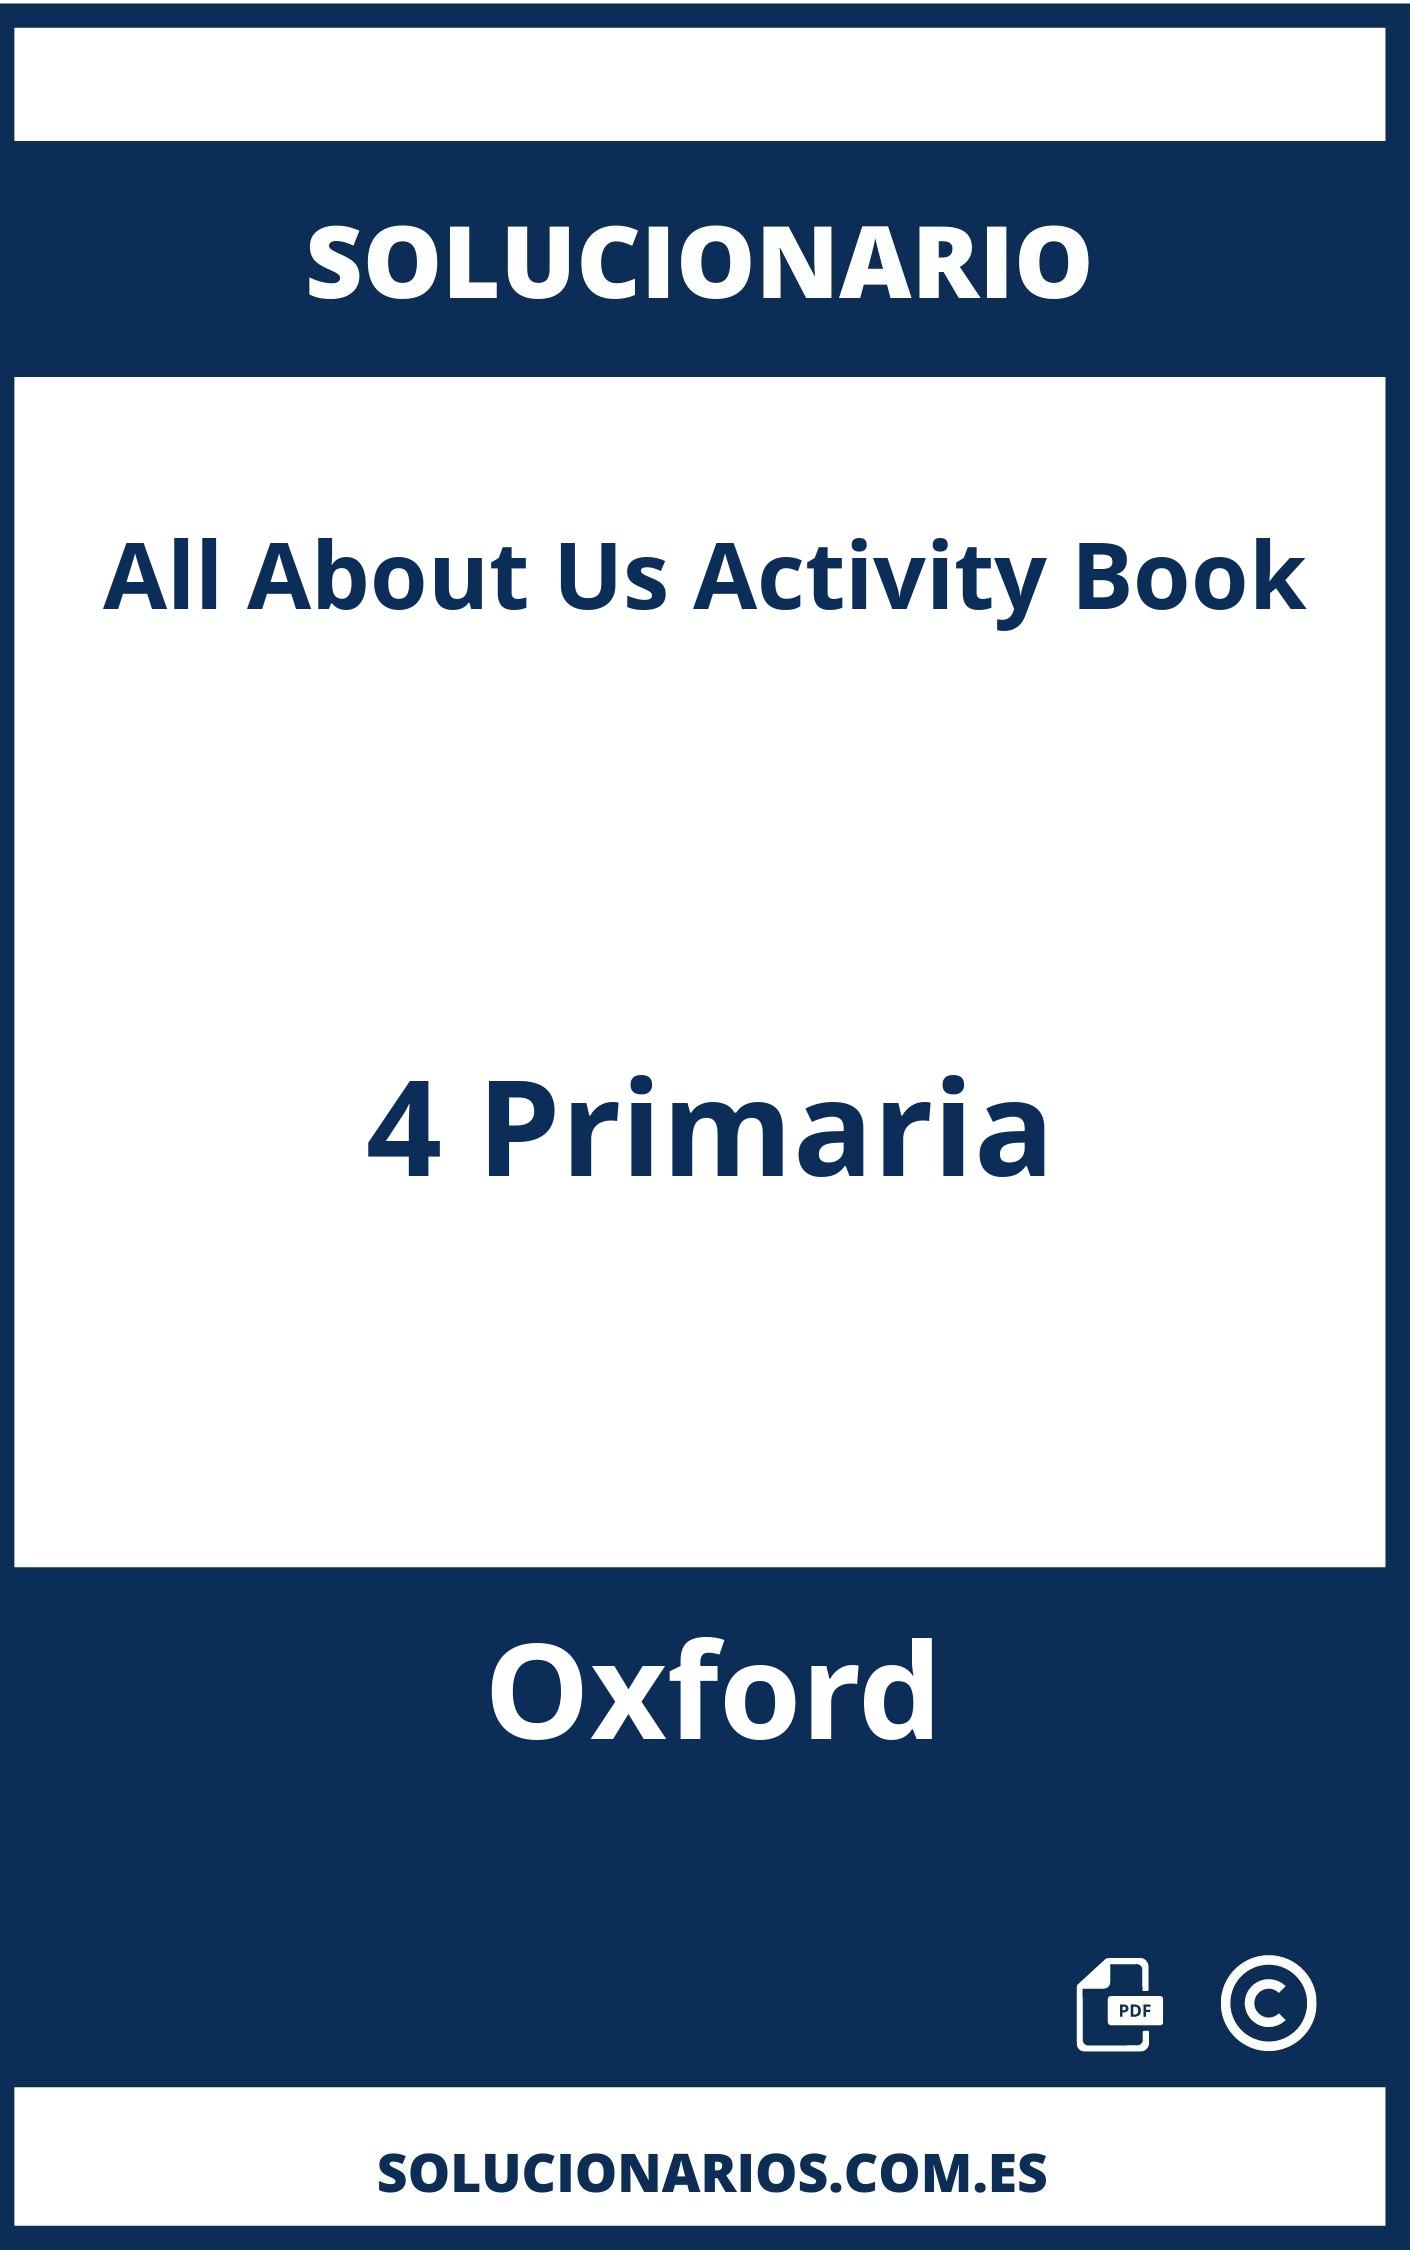 Solucionario All About Us Activity Book 4 Primaria Oxford